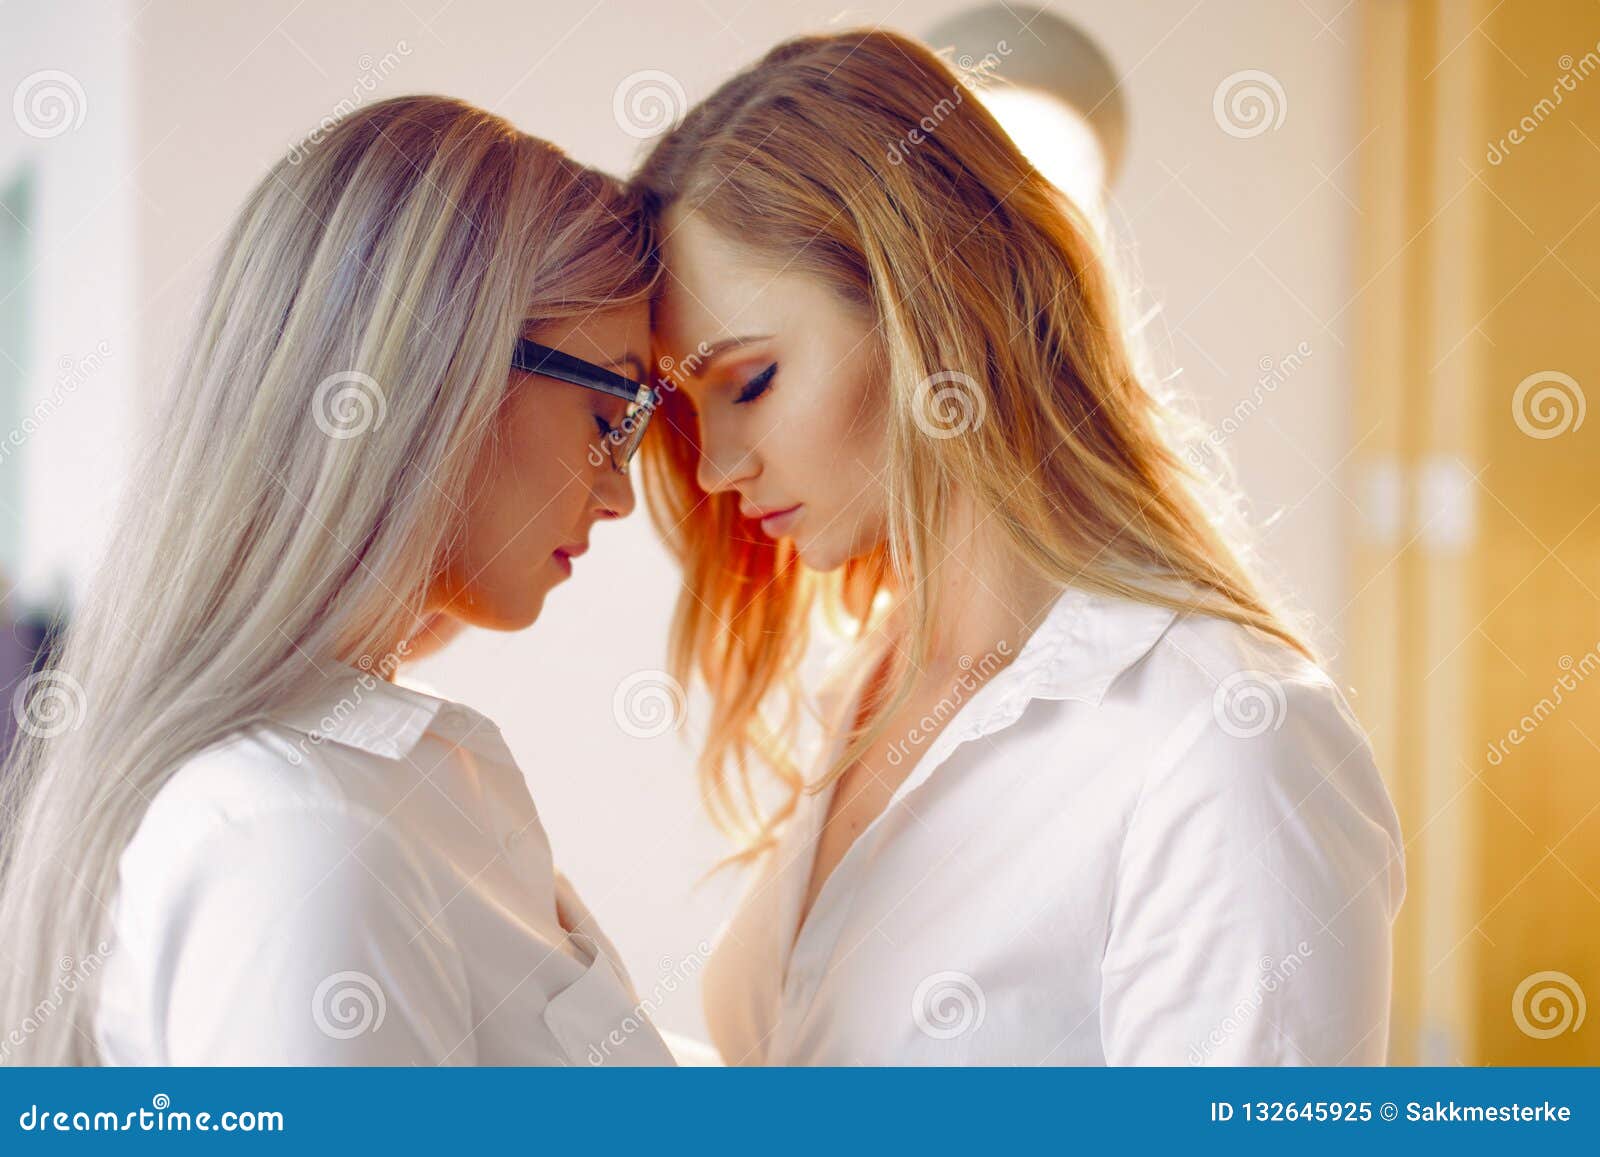 lesbian teen couple rubs